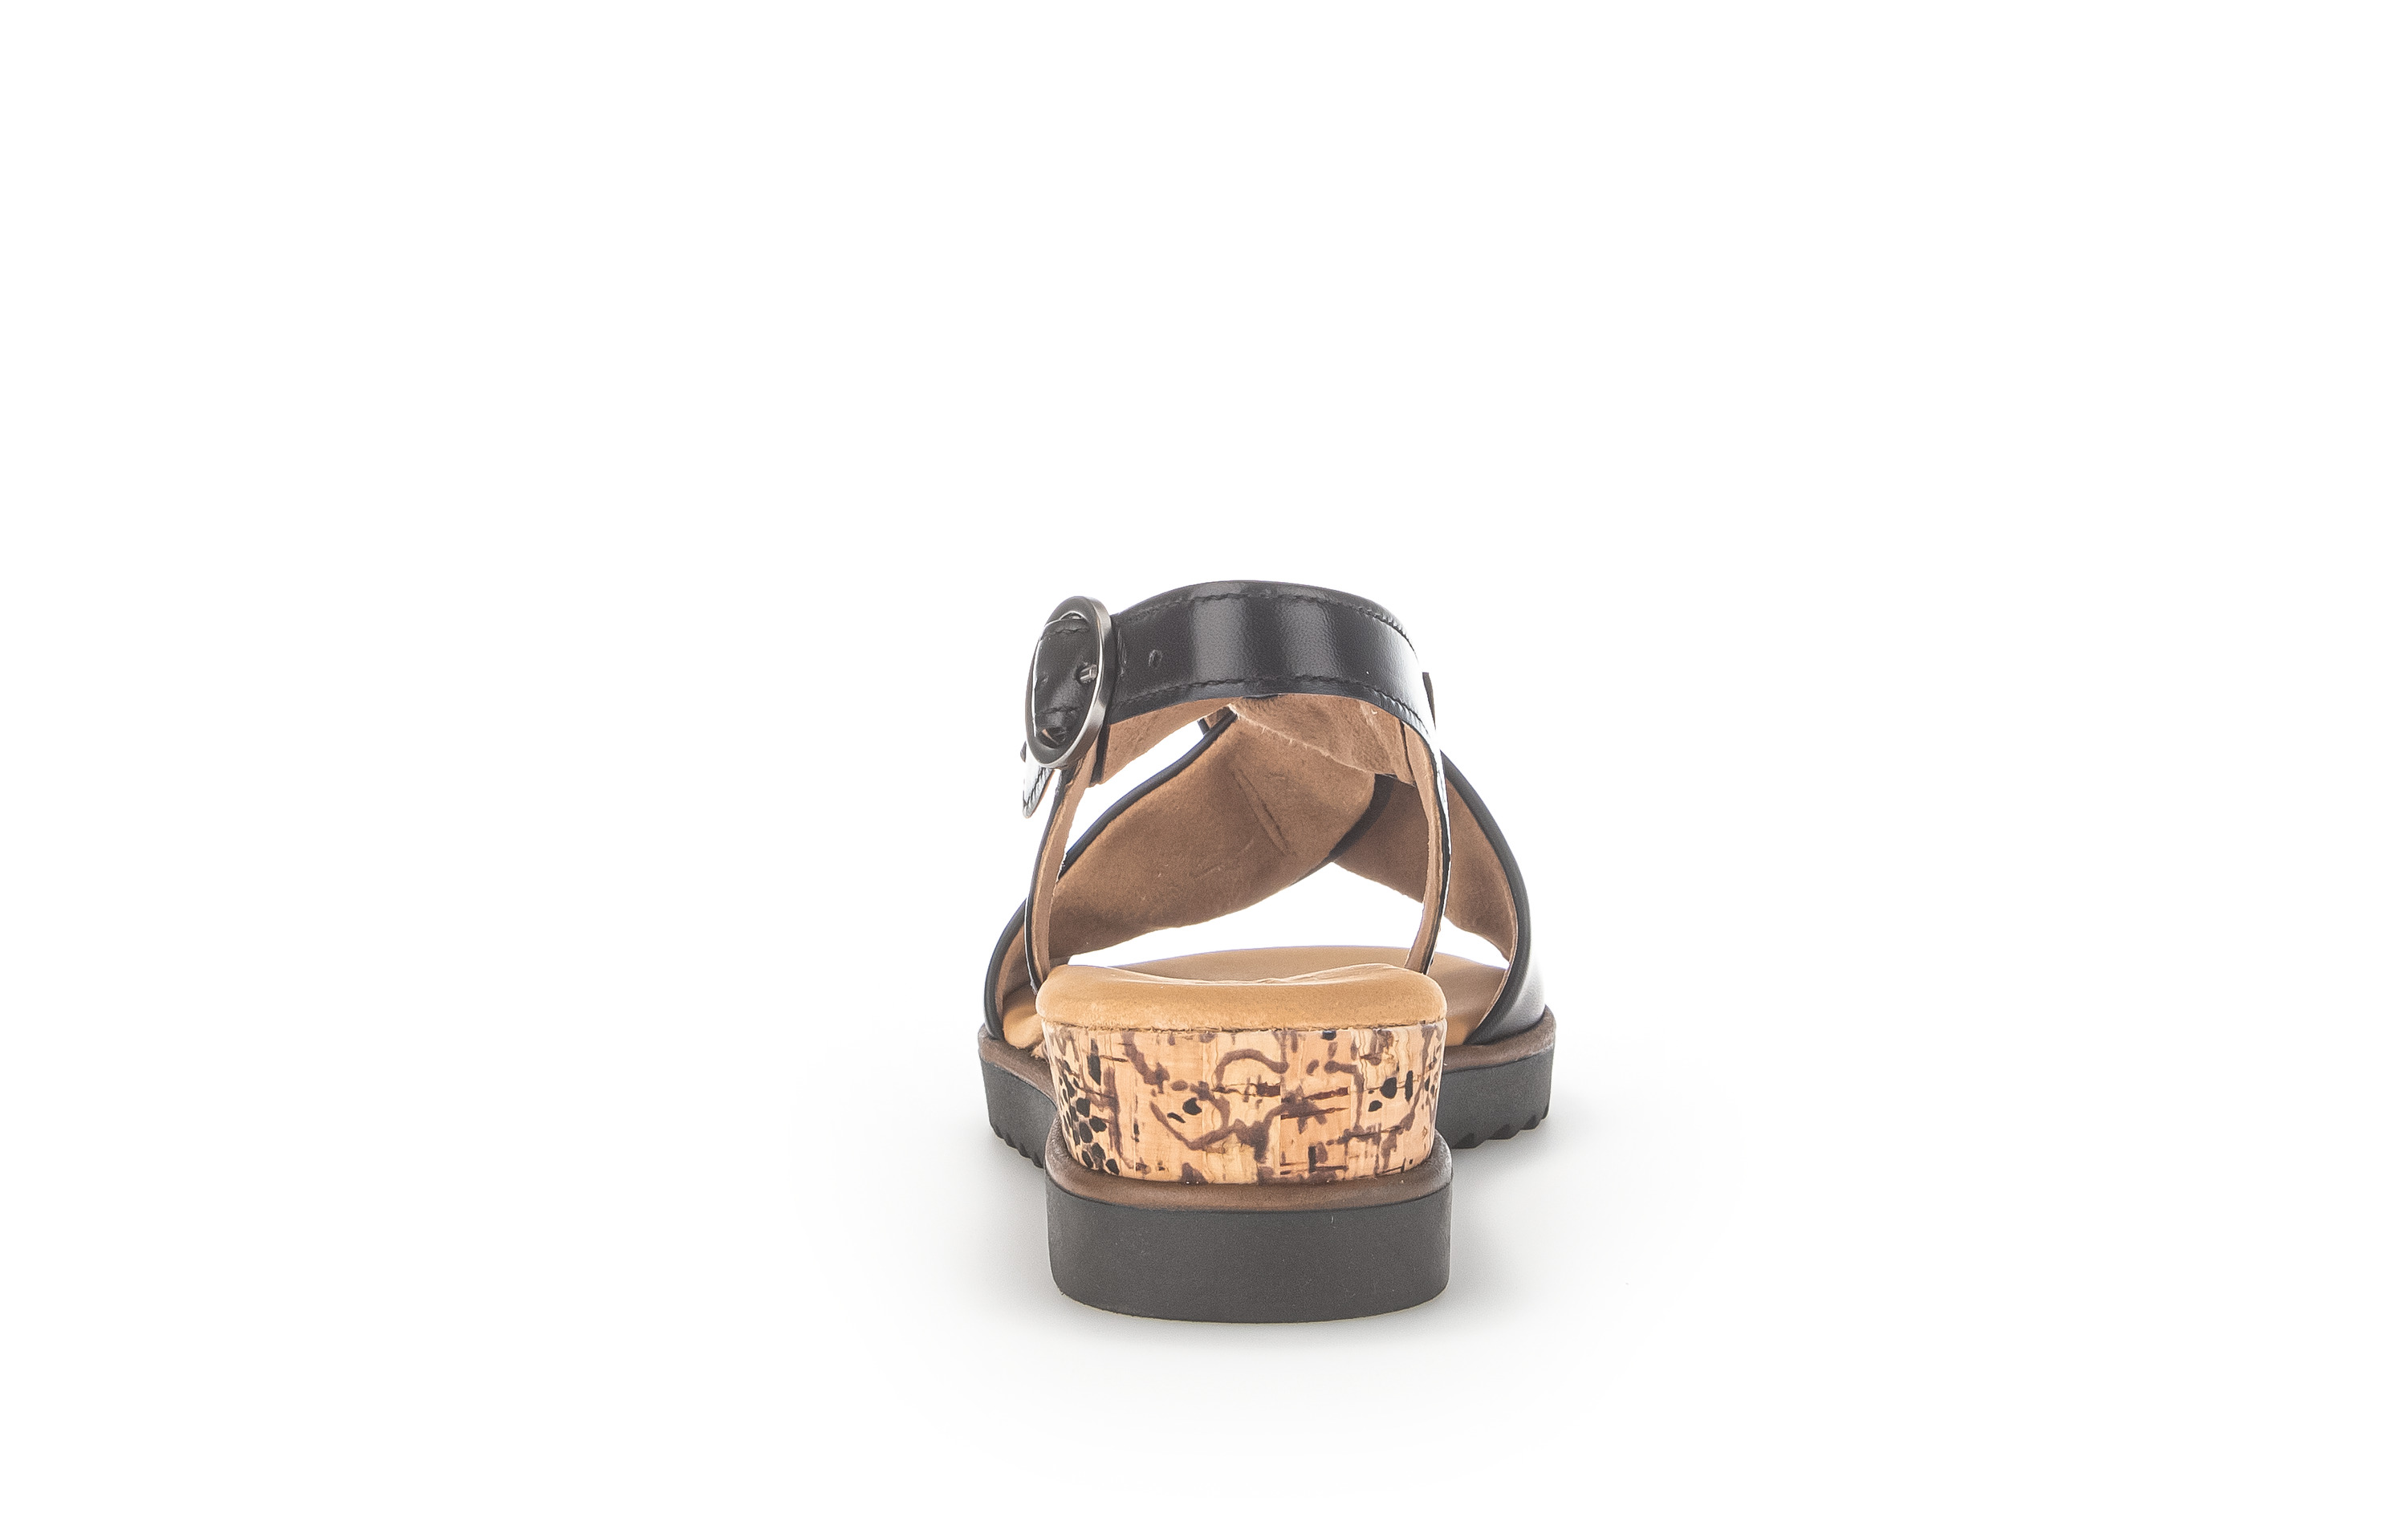 Gabor Shoes Keilsandalette - Black smooth leather